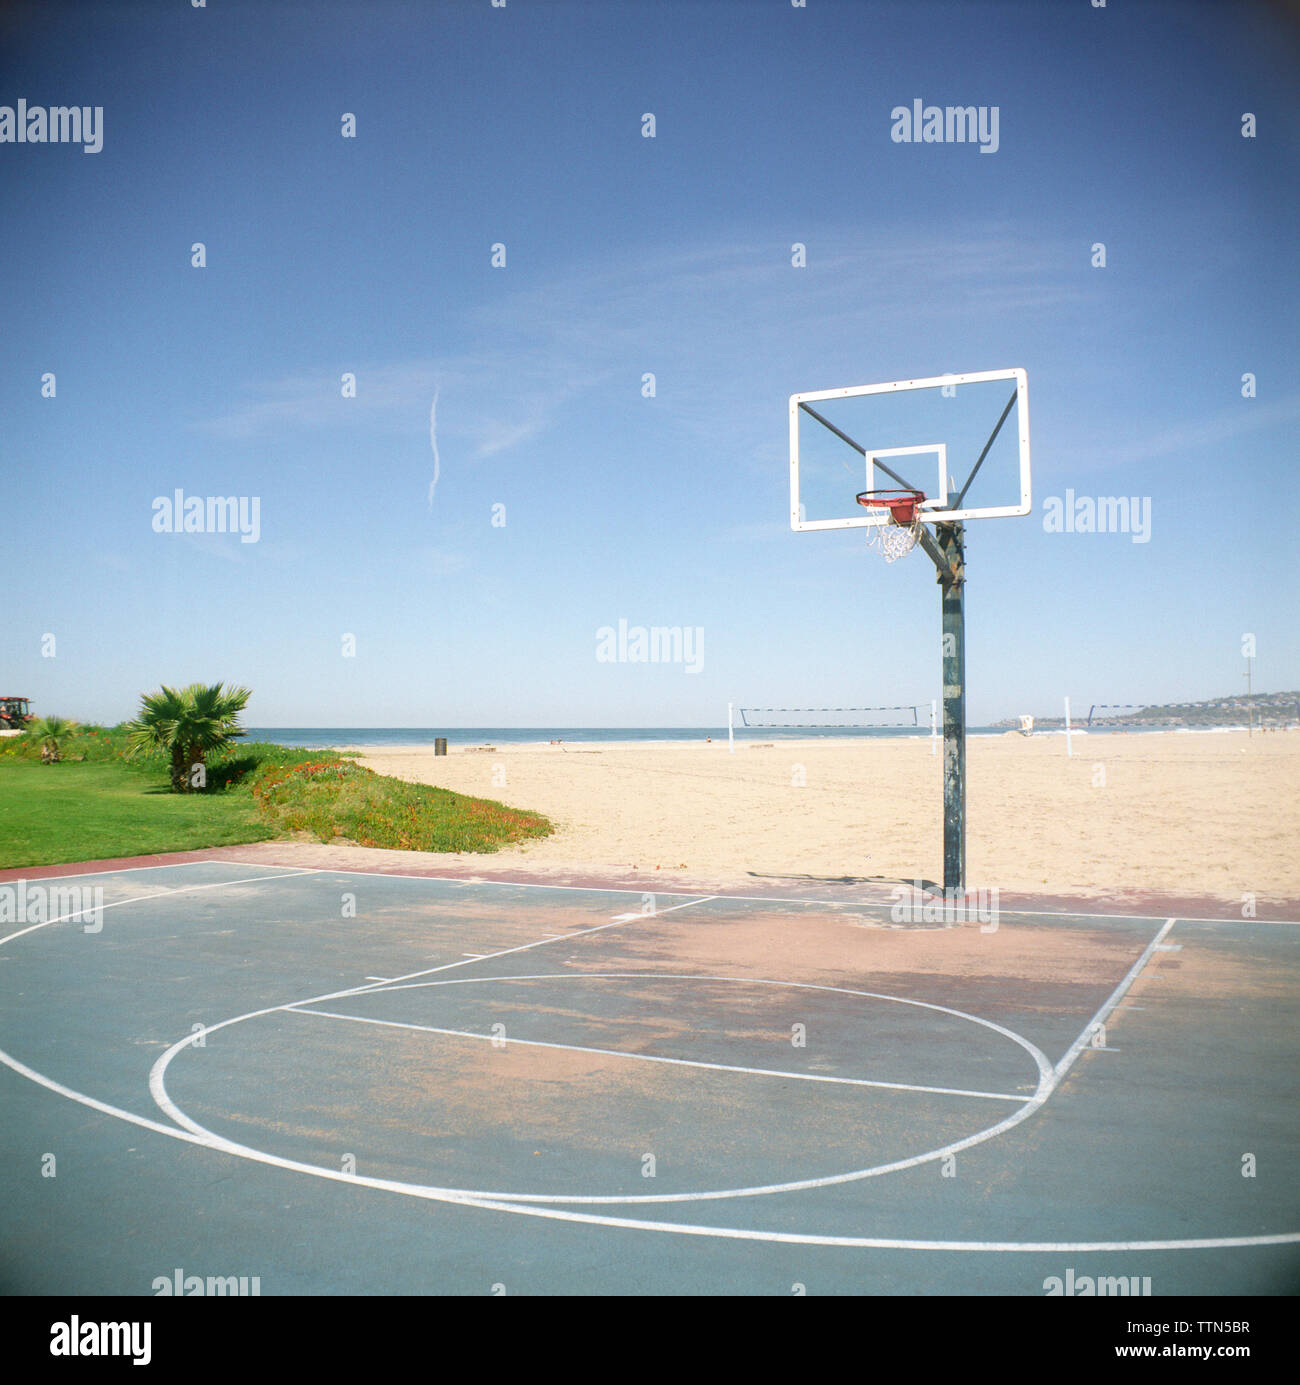 Basketballplatz am Strand gegen den blauen Himmel Stockfoto